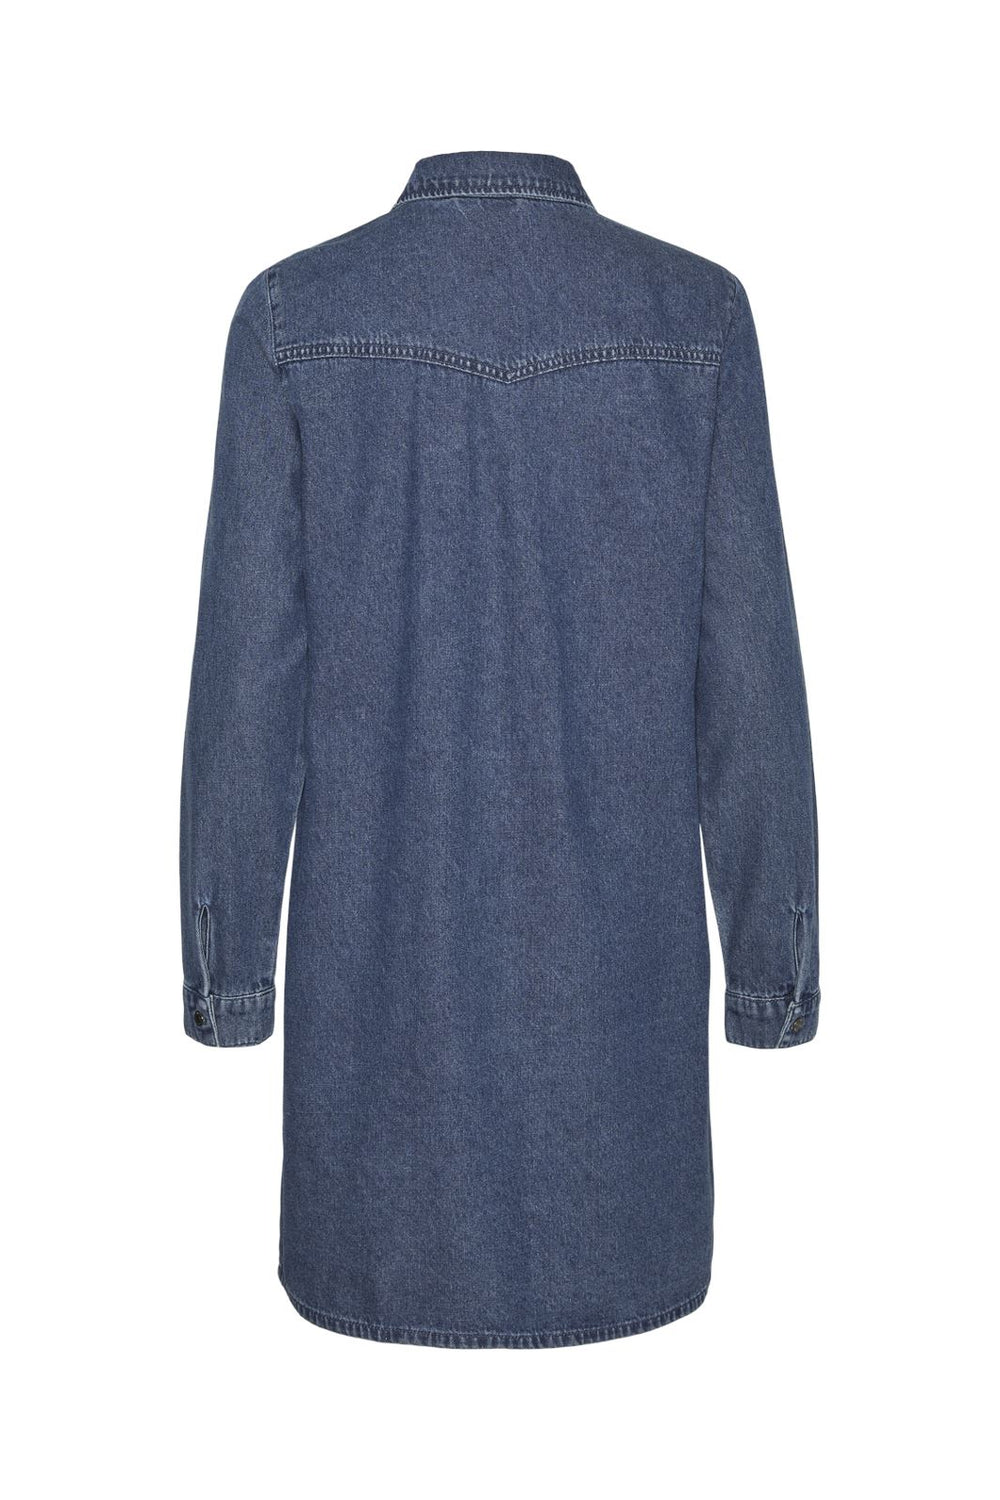 Vero Moda - Vmjennie Ls Short Denim Dress Mix - 4536351 Medium Blue Denim